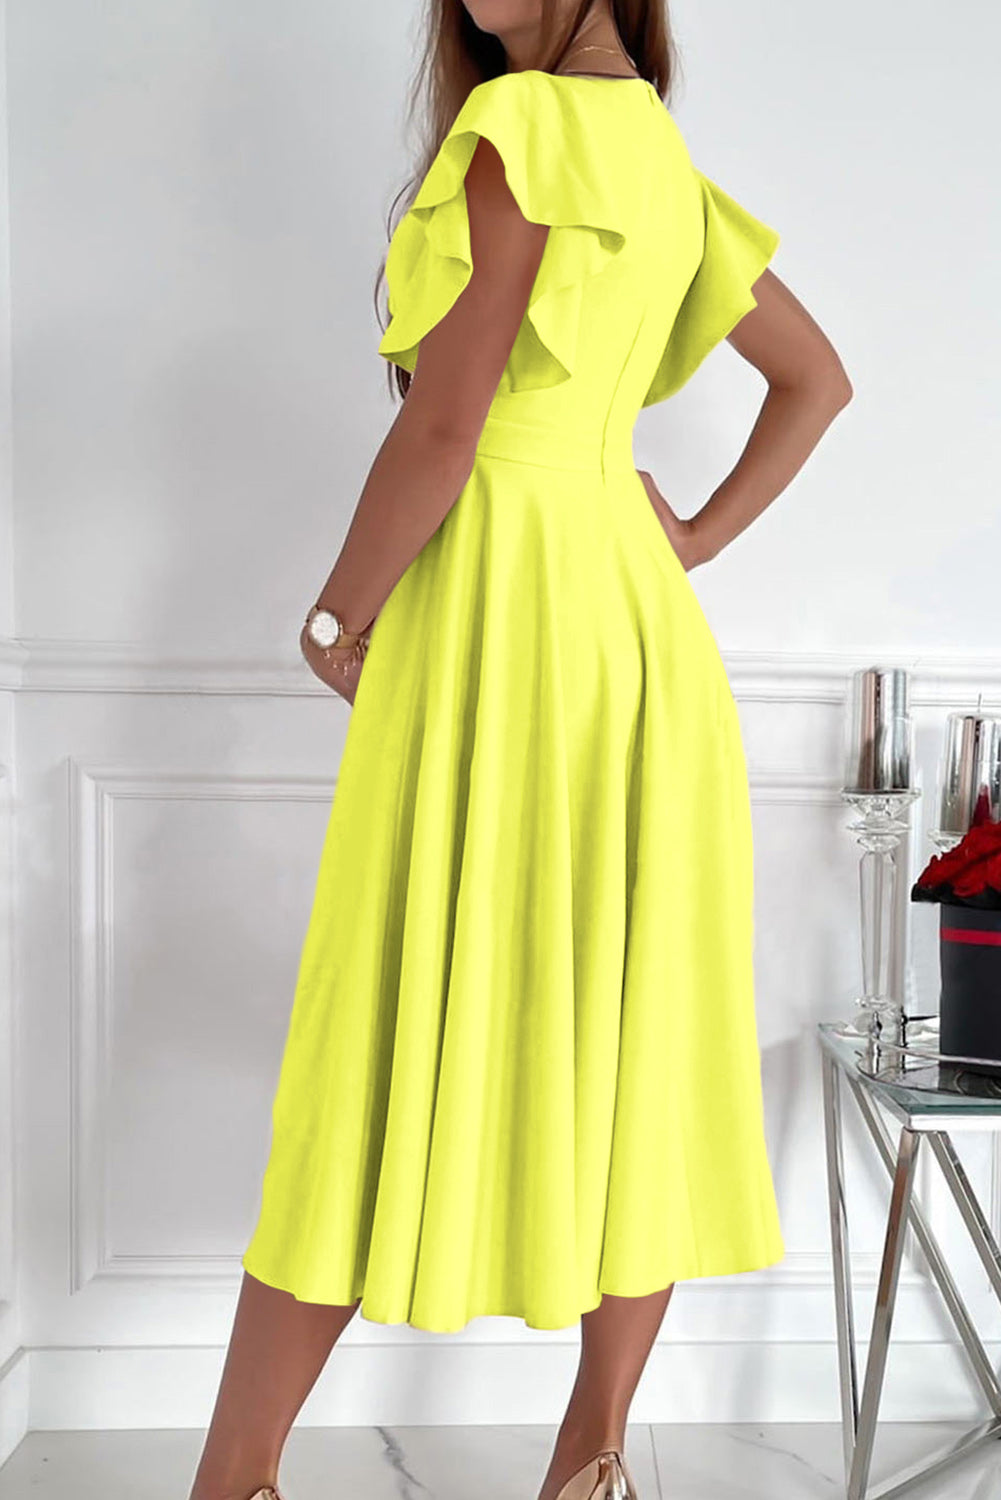 LC6110363-7-S, LC6110363-7-M, LC6110363-7-L, LC6110363-7-XL, LC6110363-7-2XL, Yellow Womens V Neck Ruffle Sleeve Wrap Dress Midi Dress Cocktail Party Dress